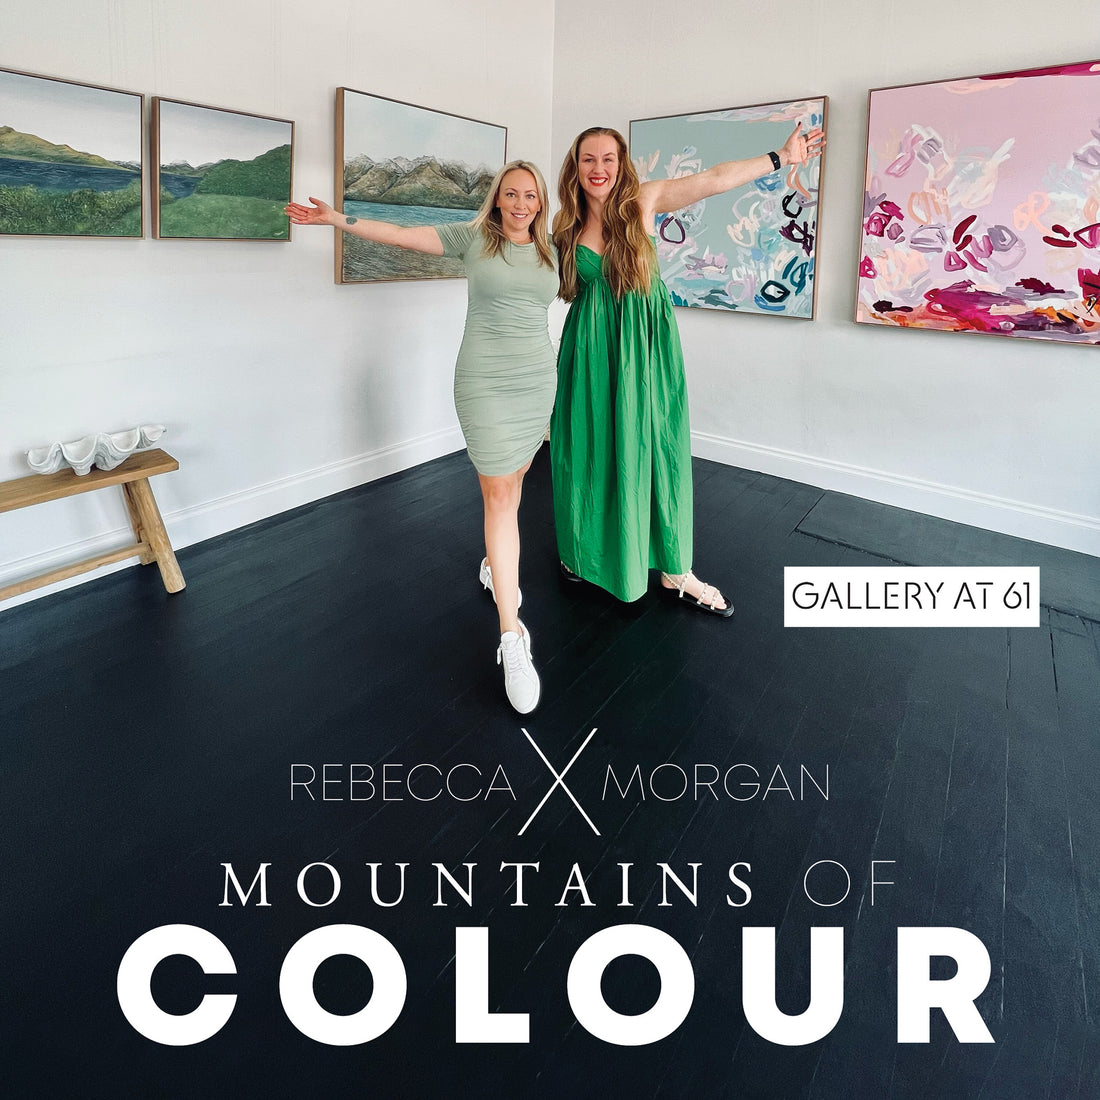 Australian abstract artist | Rebecca Koerting | Perth artist